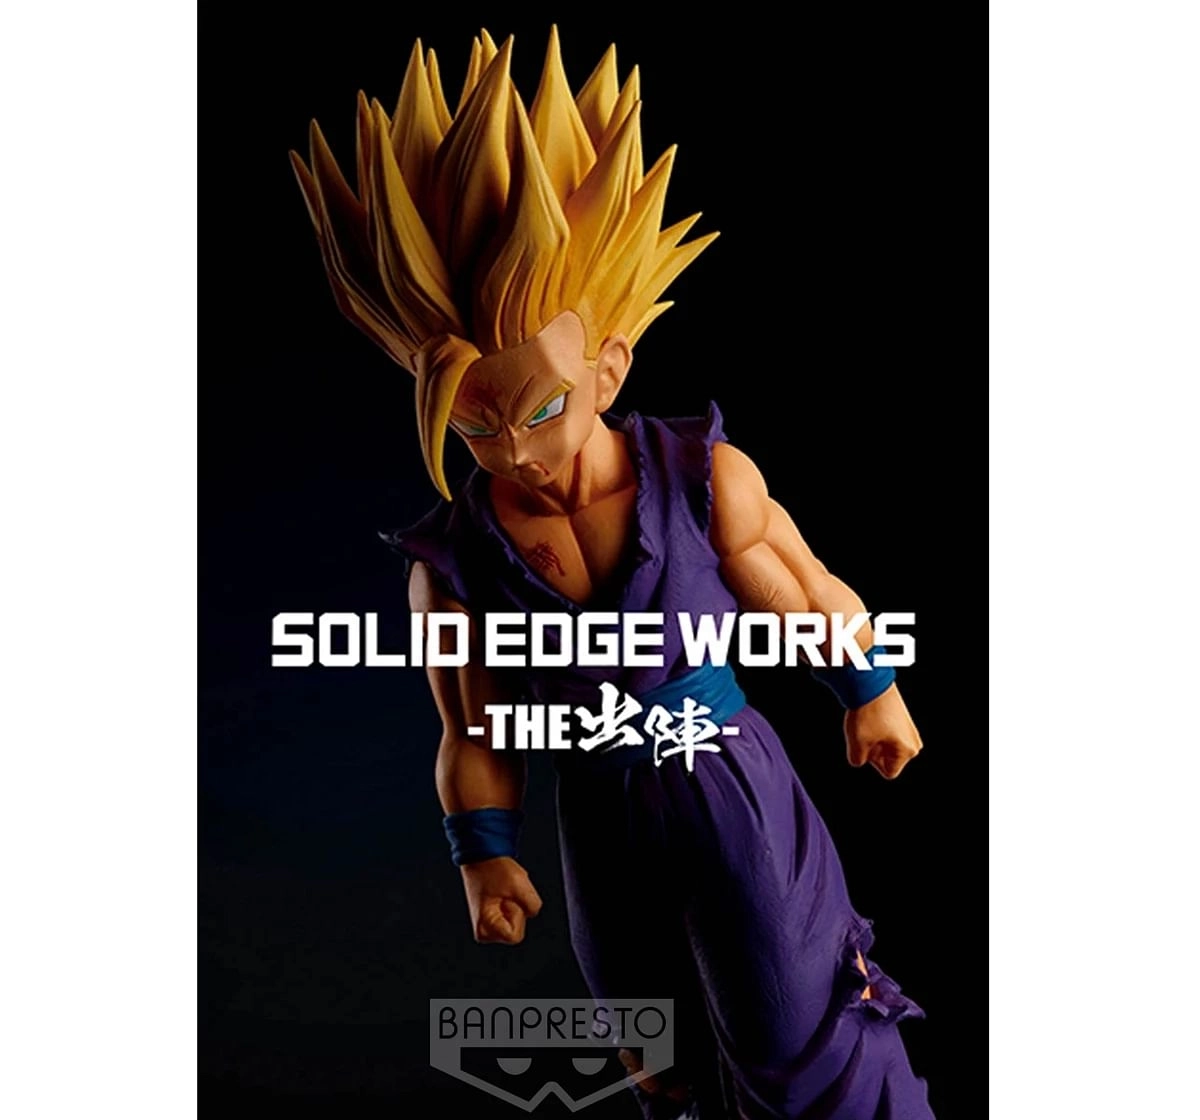  Dragon Ball Z Solid Edge Works vol.3(B:Super Saiyan